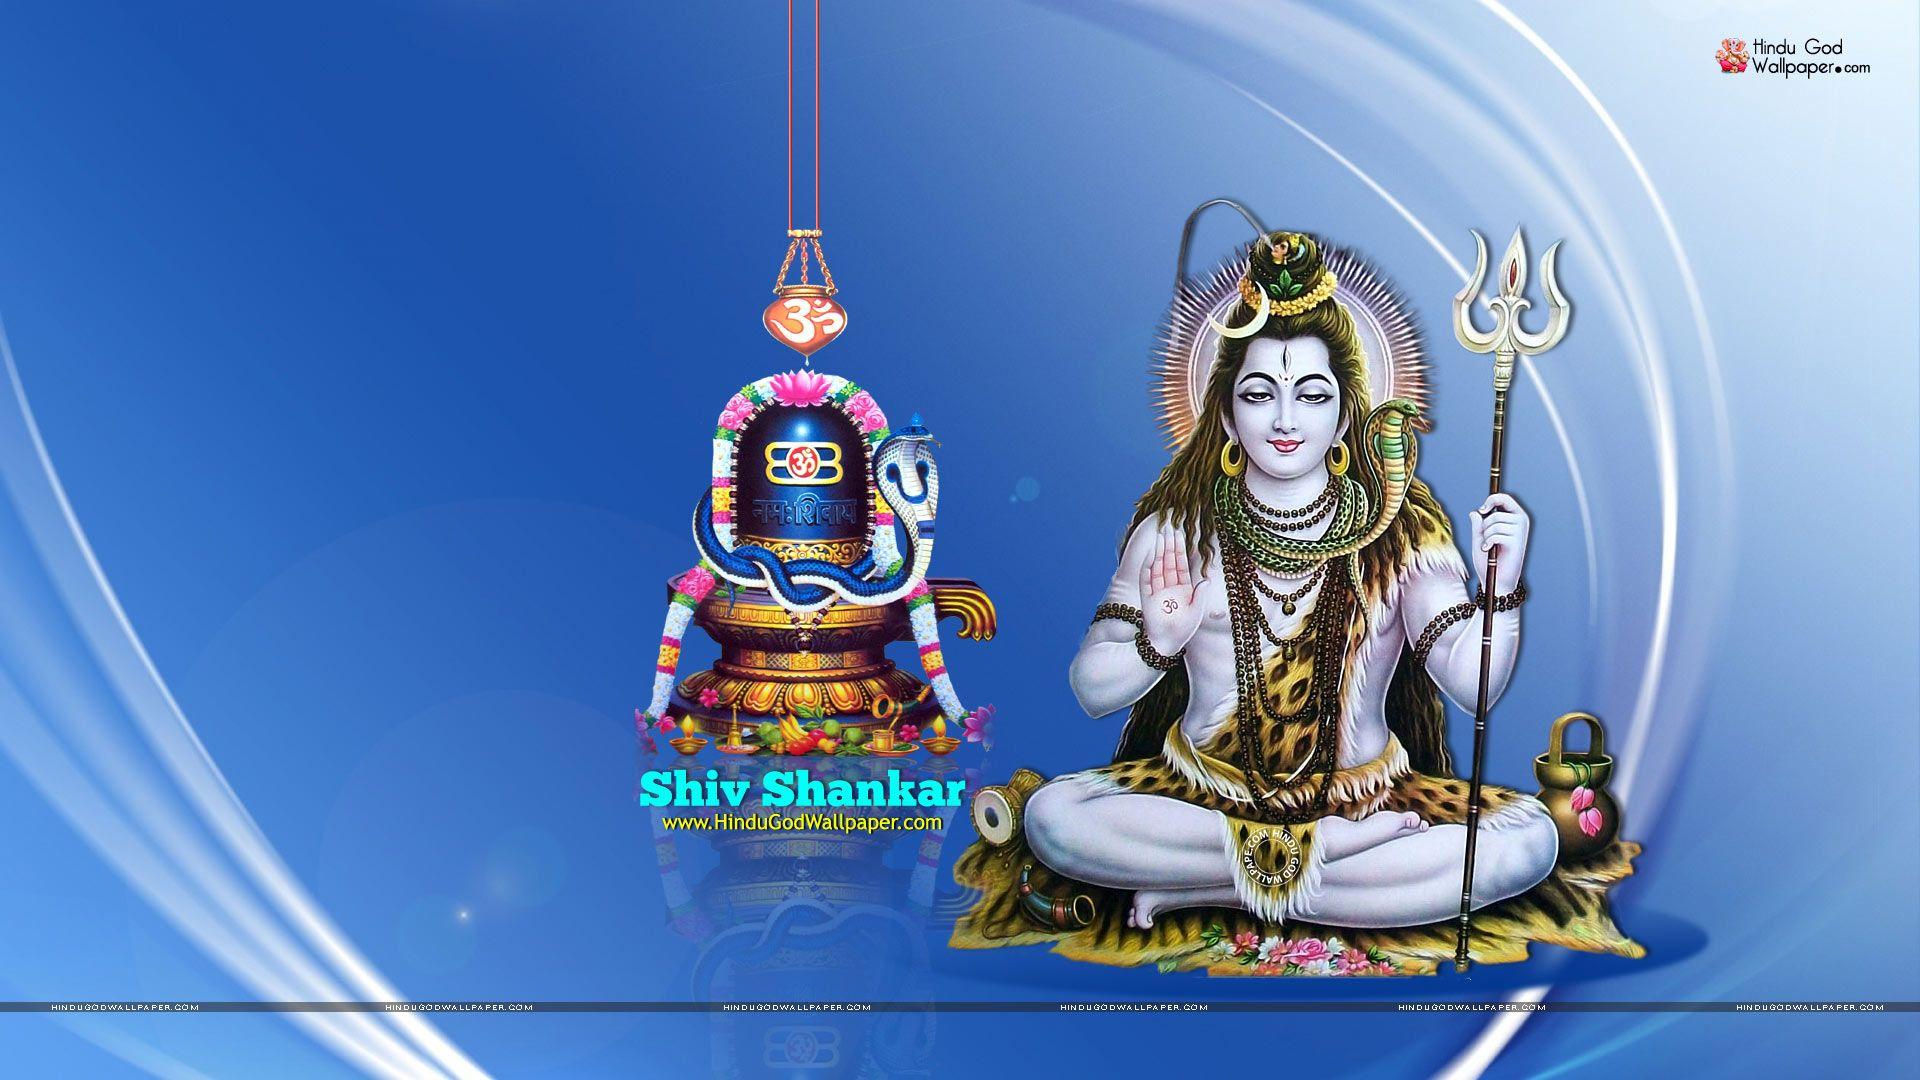 Shiv Shankar Wallpaper HD Full Size 1080p Download. Shiva